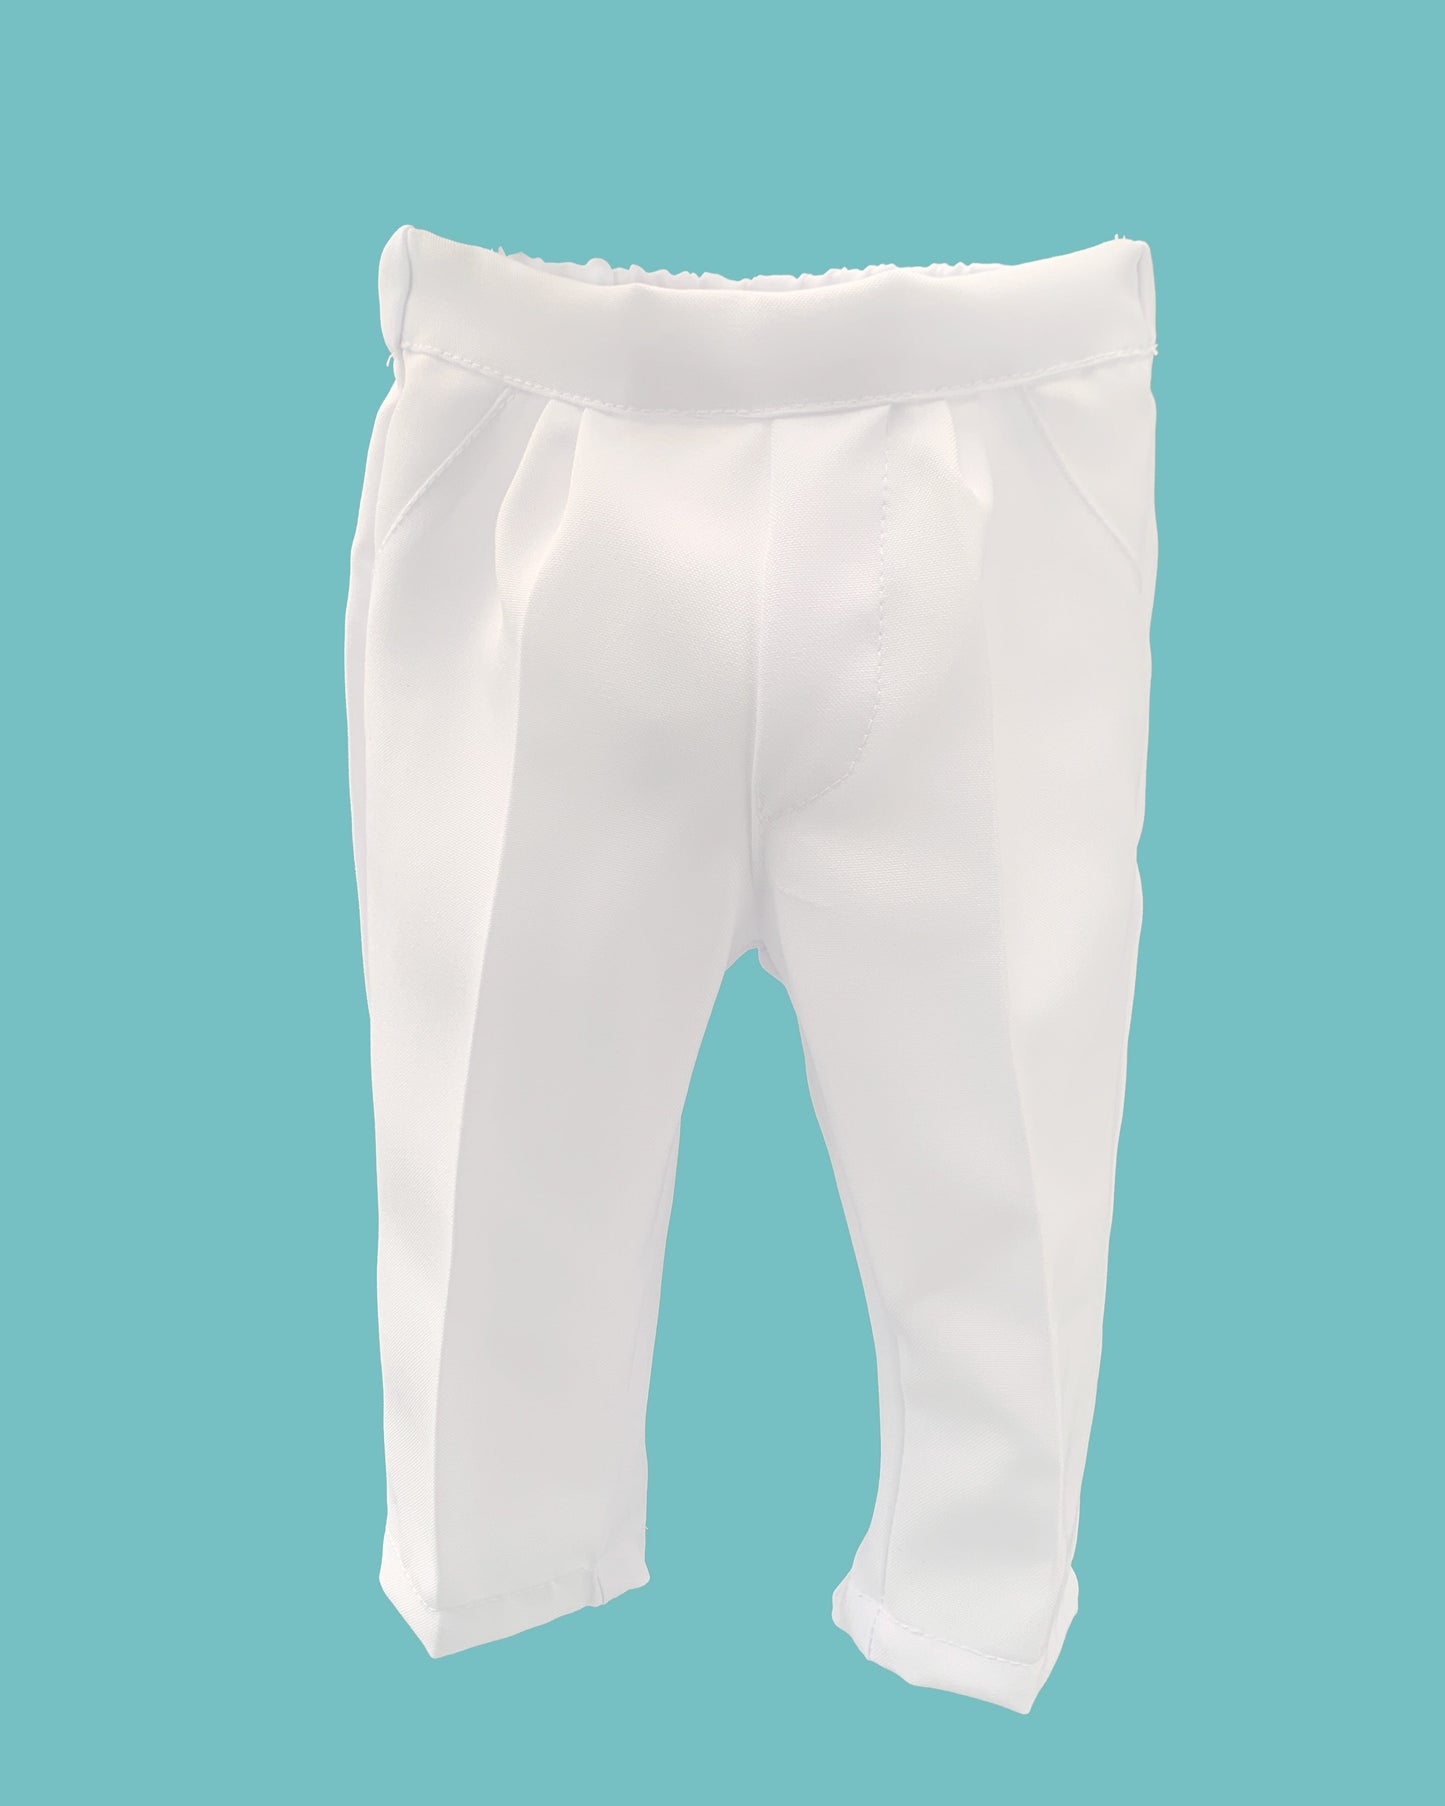 Traje 4 piezas tirantes blancos estilo pantalón o short